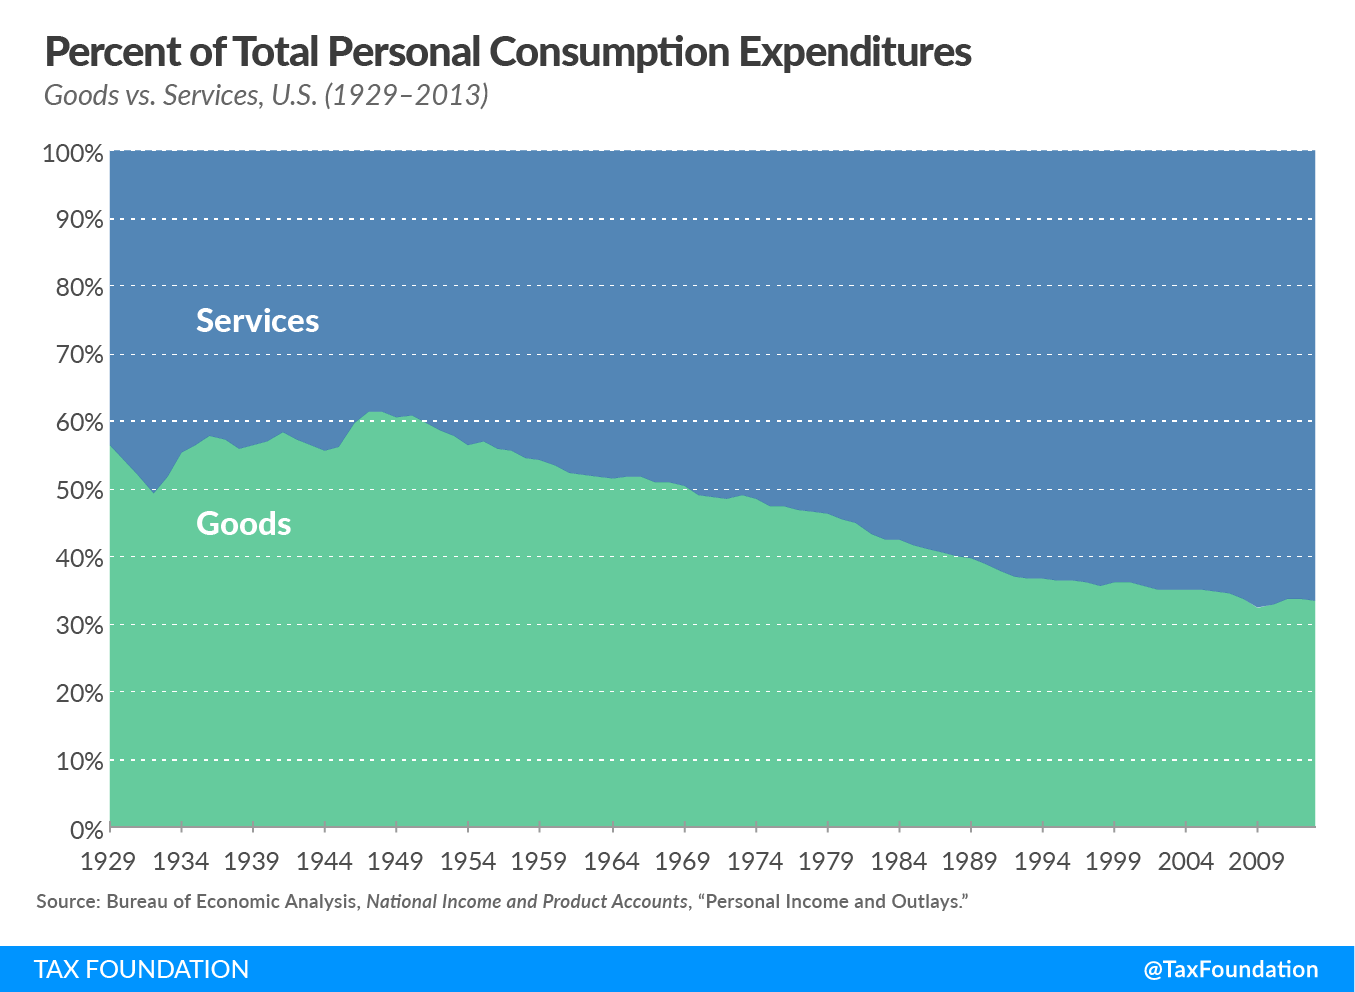 Percent total personal consumption expenditures